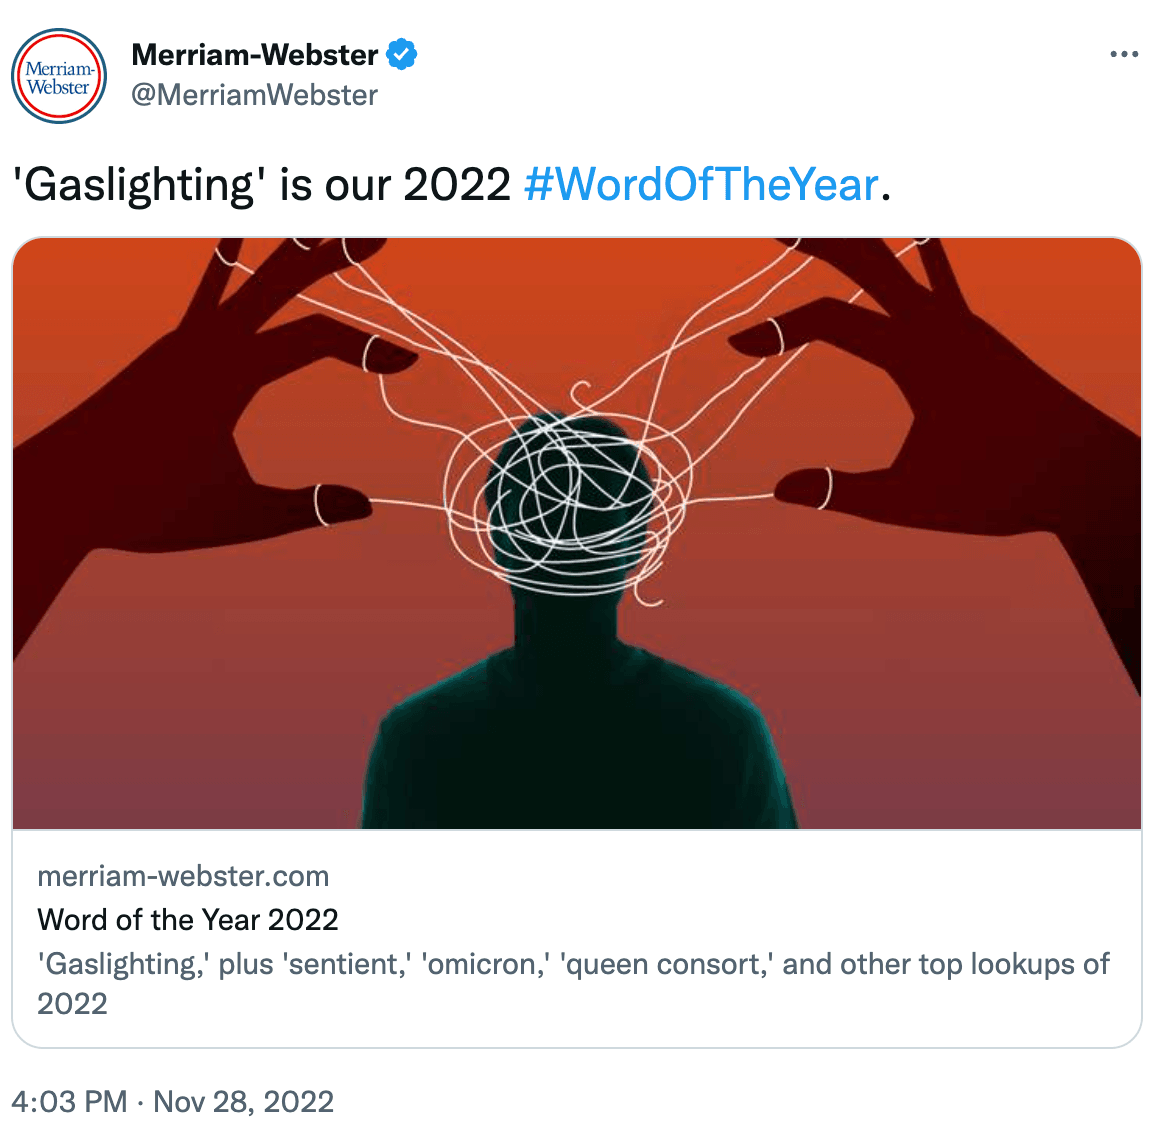 Gaslighting' is our 2022 WordOfTheYear